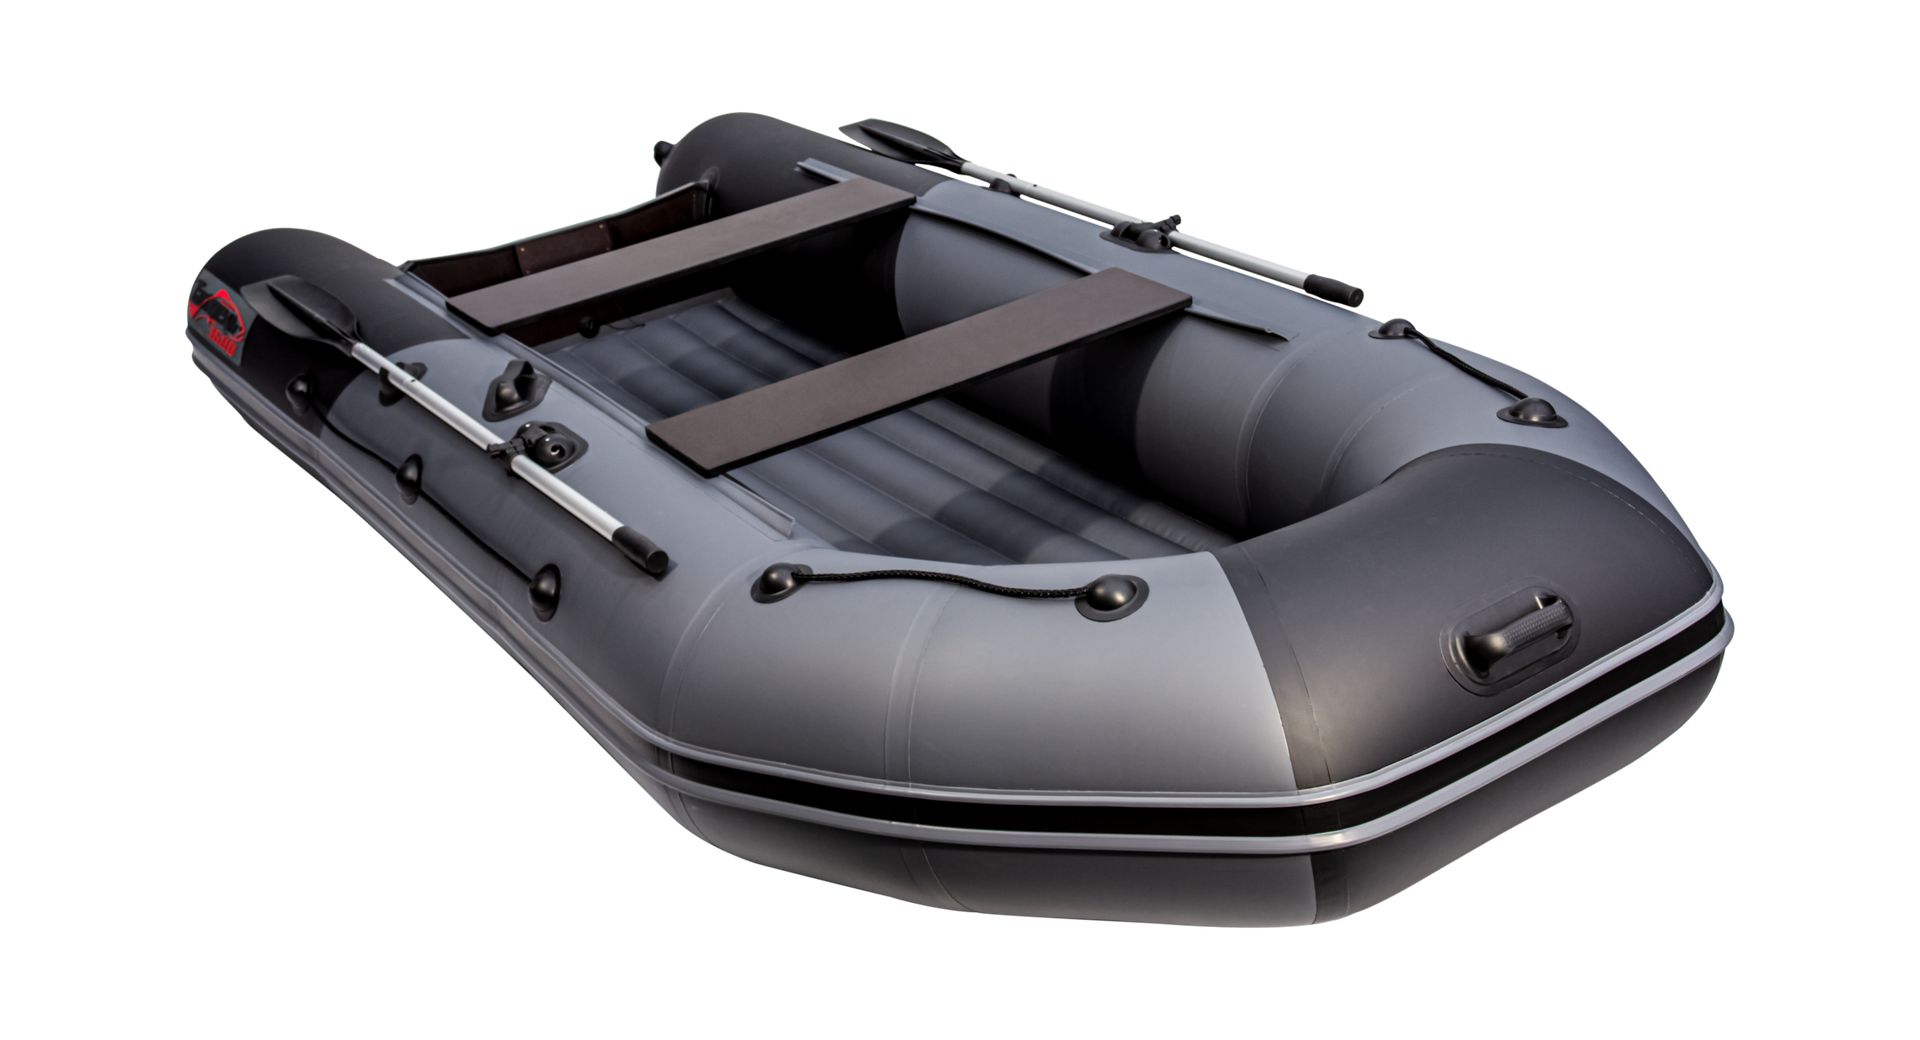 Надувная лодка ПВХ, Таймень NX 3600 НДНД PRO, графит/черный 00171354, цвет графит/черный - фото 3